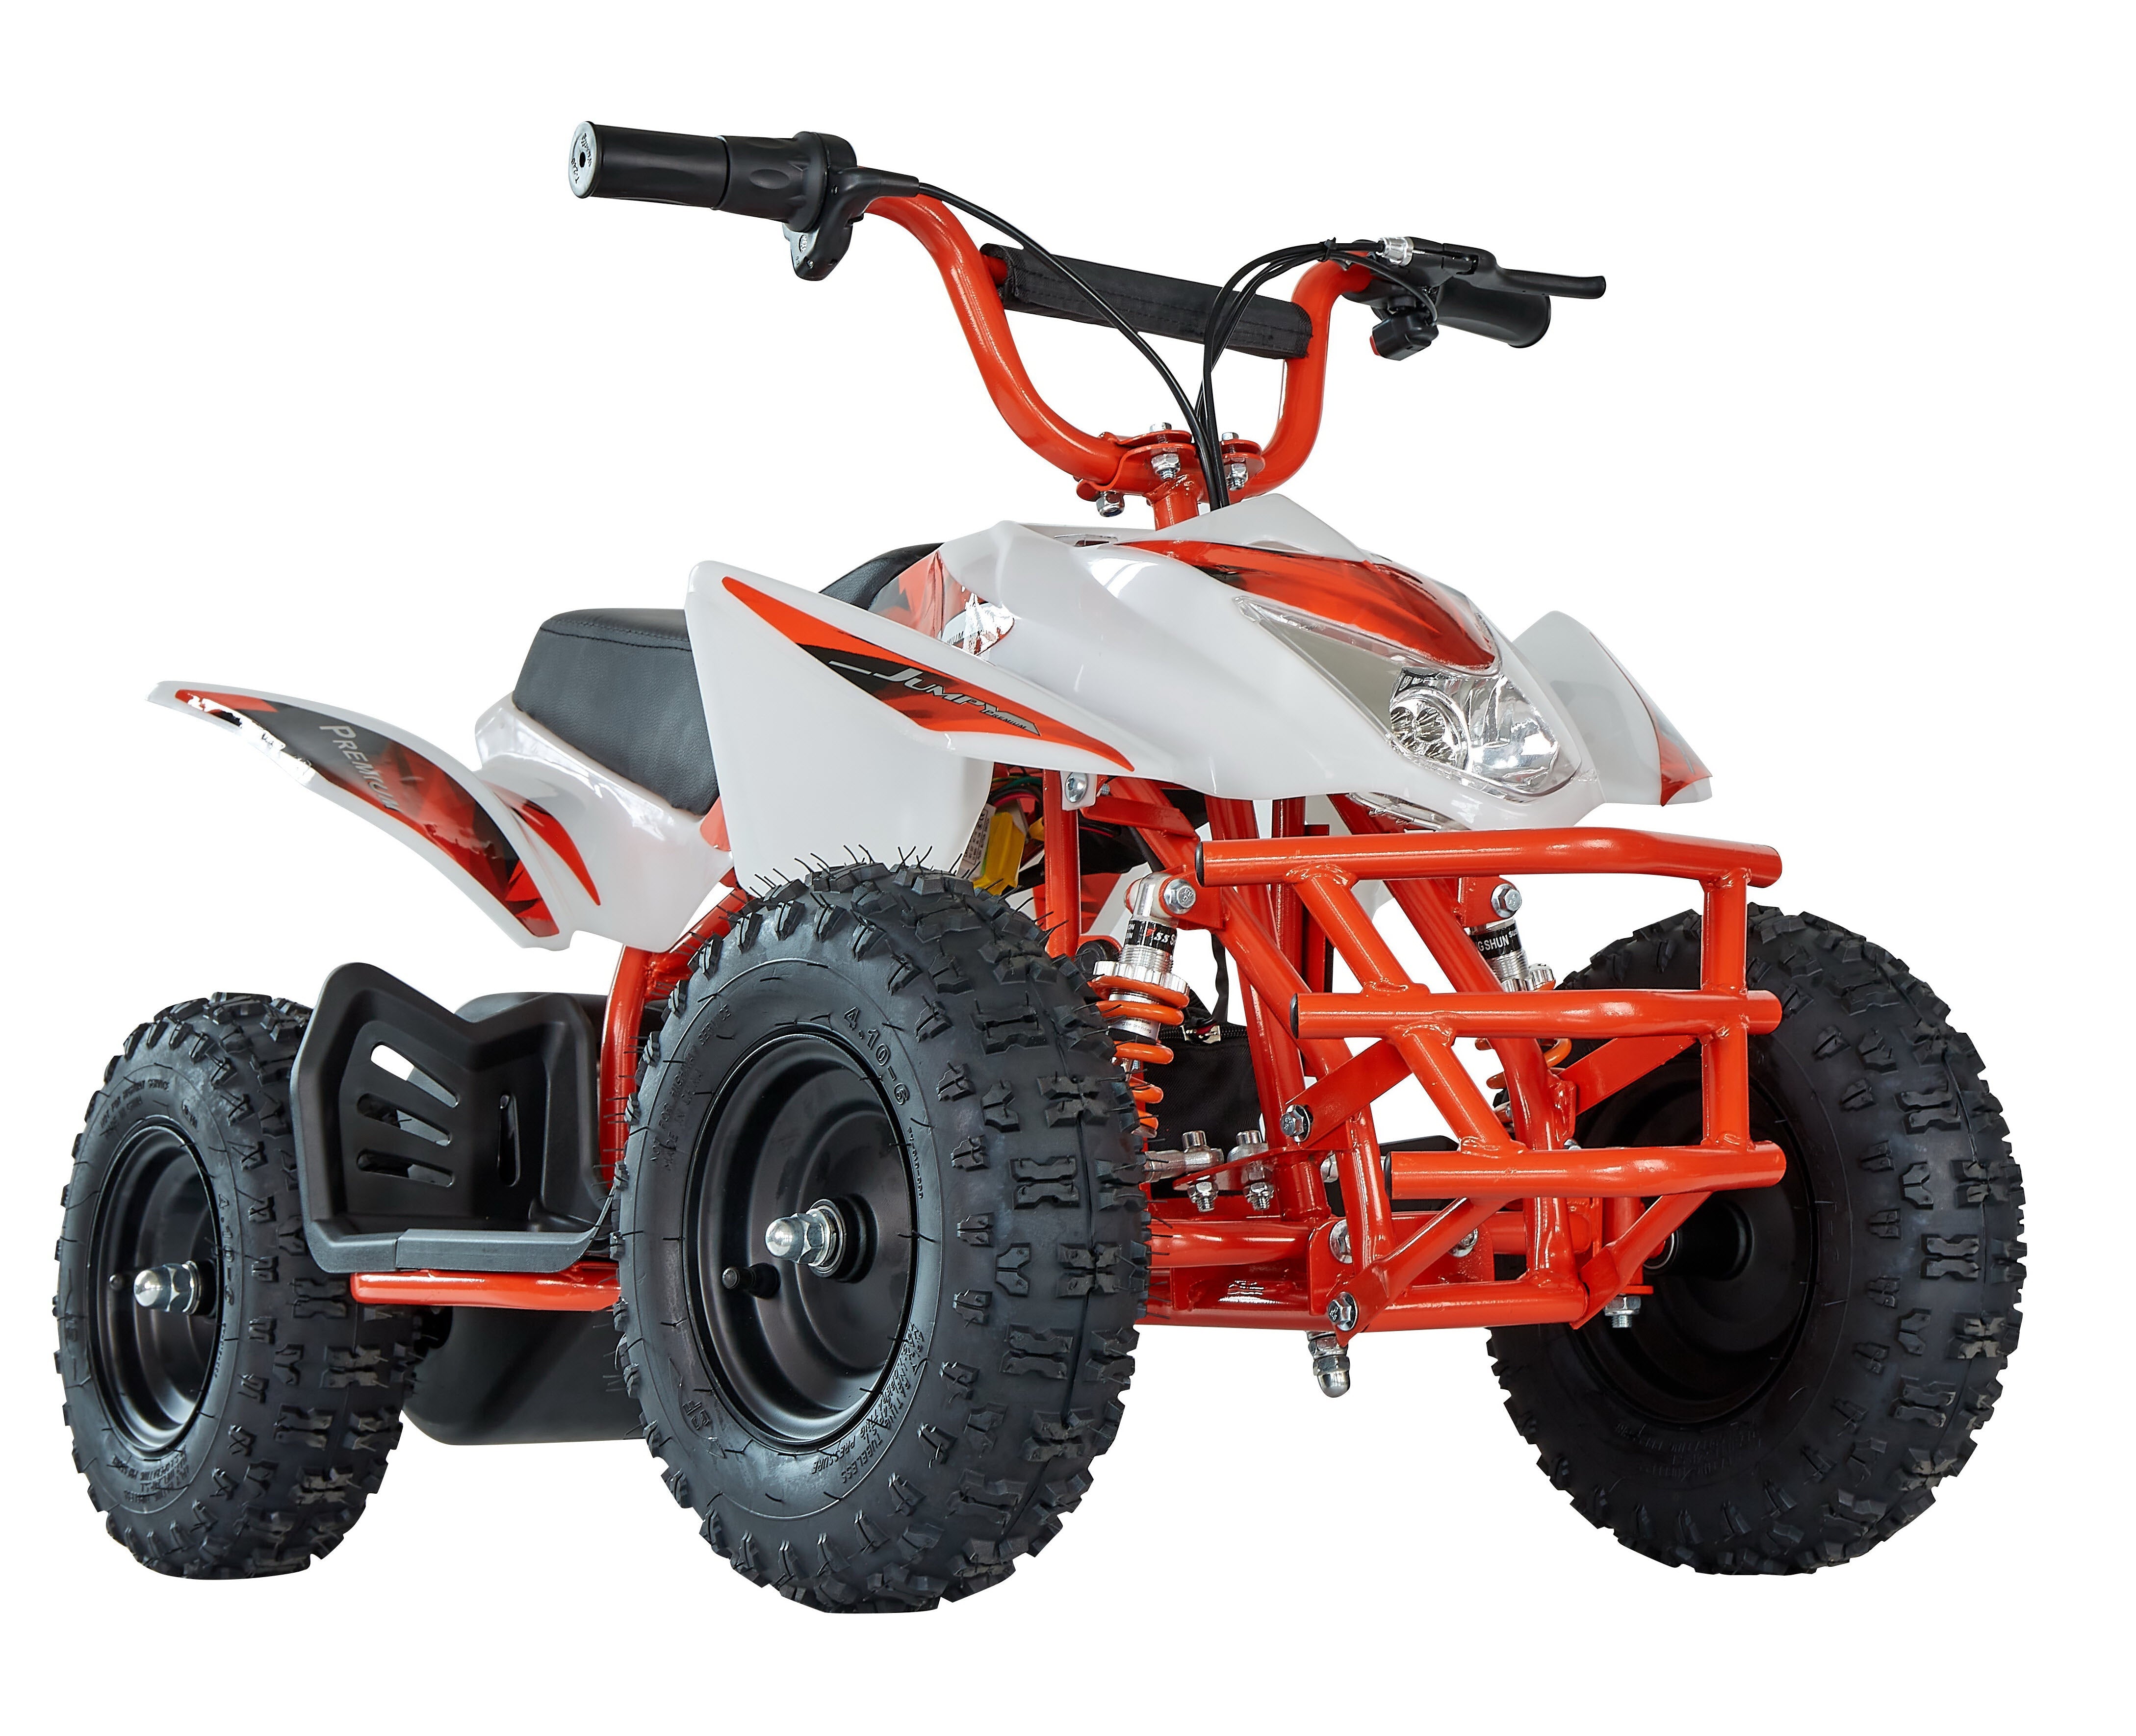 Pure Fun World PFW Titan 24V Mini Quad Kids Electric All-Terrain Vehicle ATV - Upzy.com